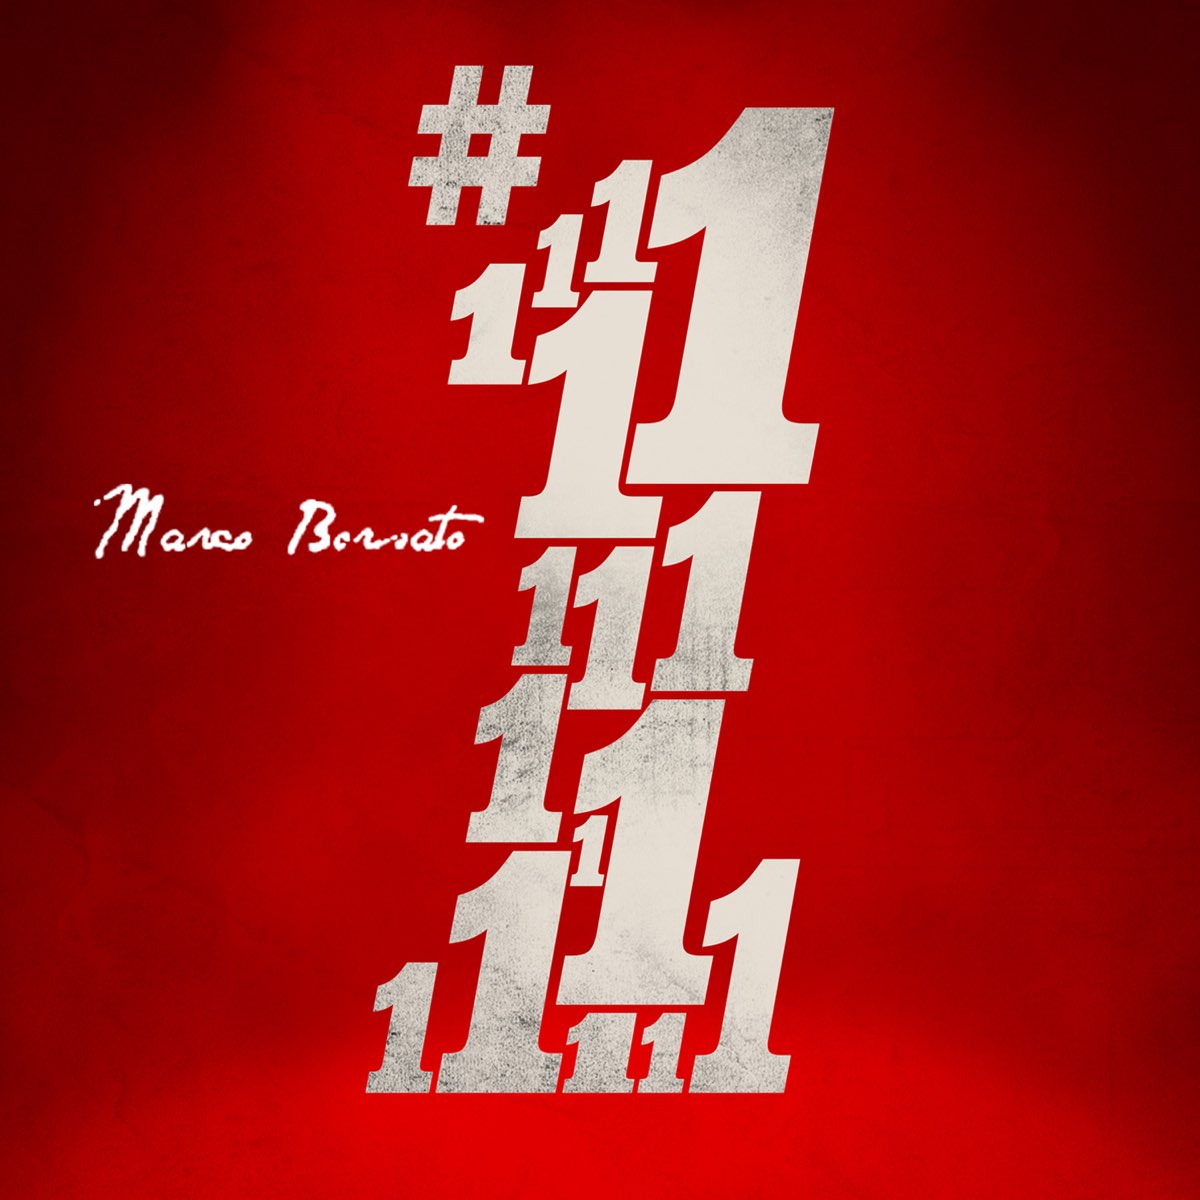 1 - Album by Marco Borsato - Apple Music